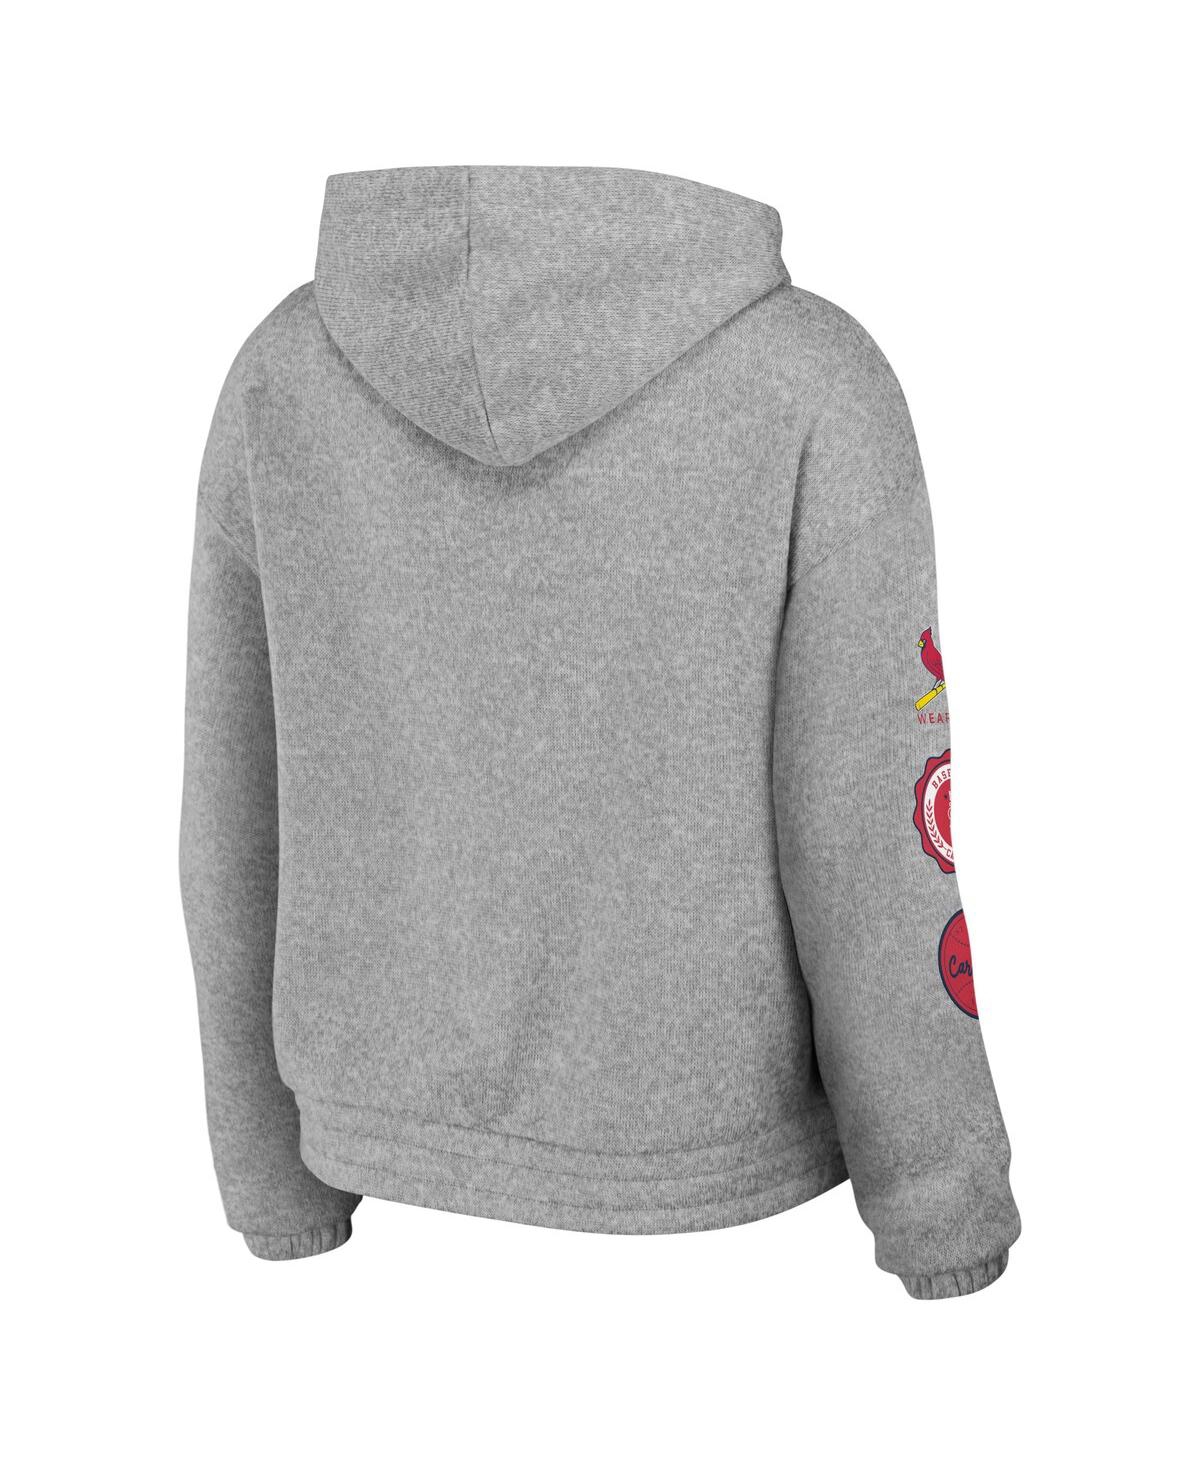 Shop Wear By Erin Andrews Women's  Gray St. Louis Cardinals Full-zip Hoodie